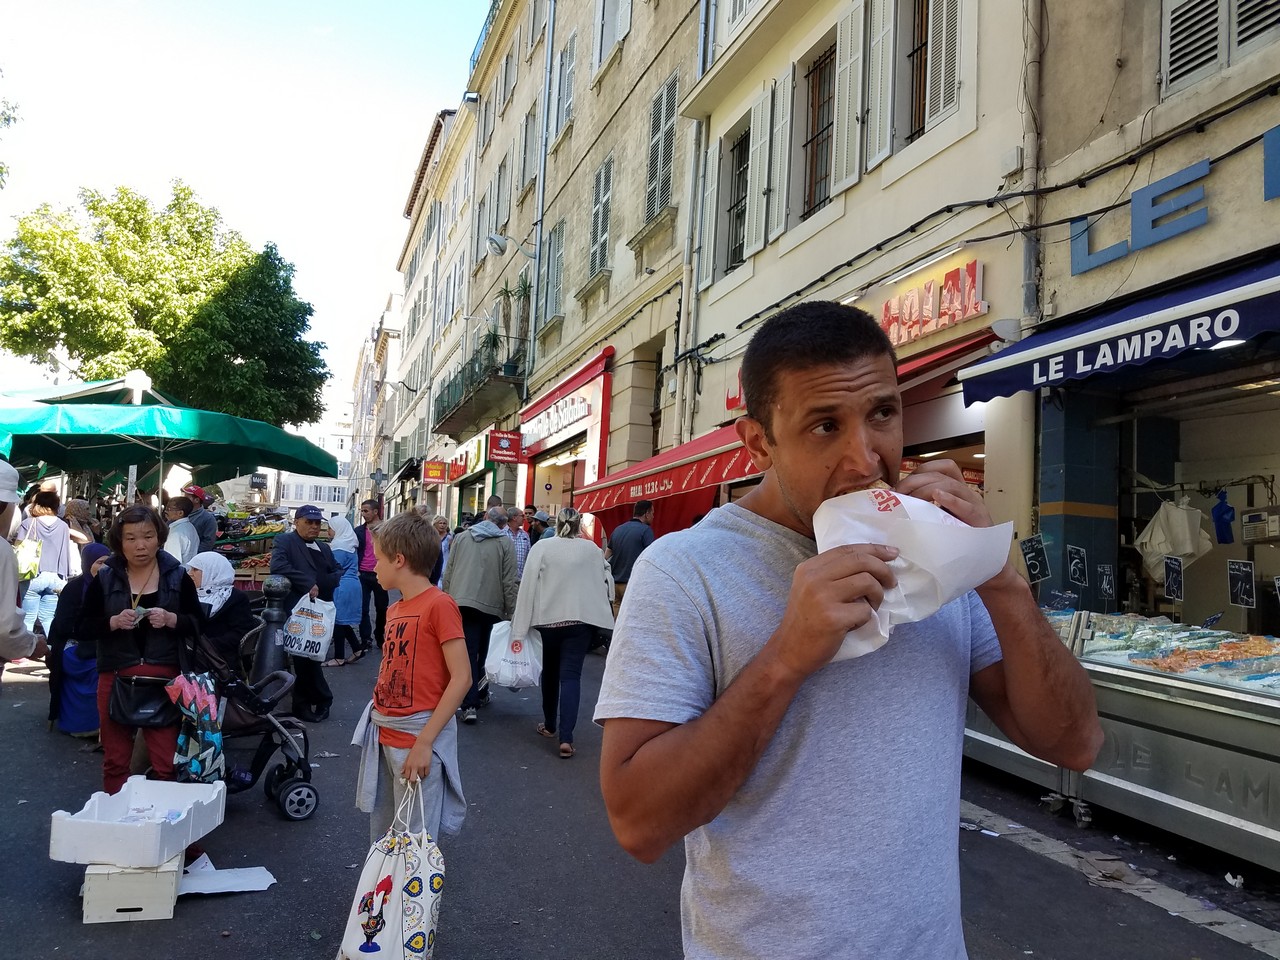 a man eating a sandwich on a street